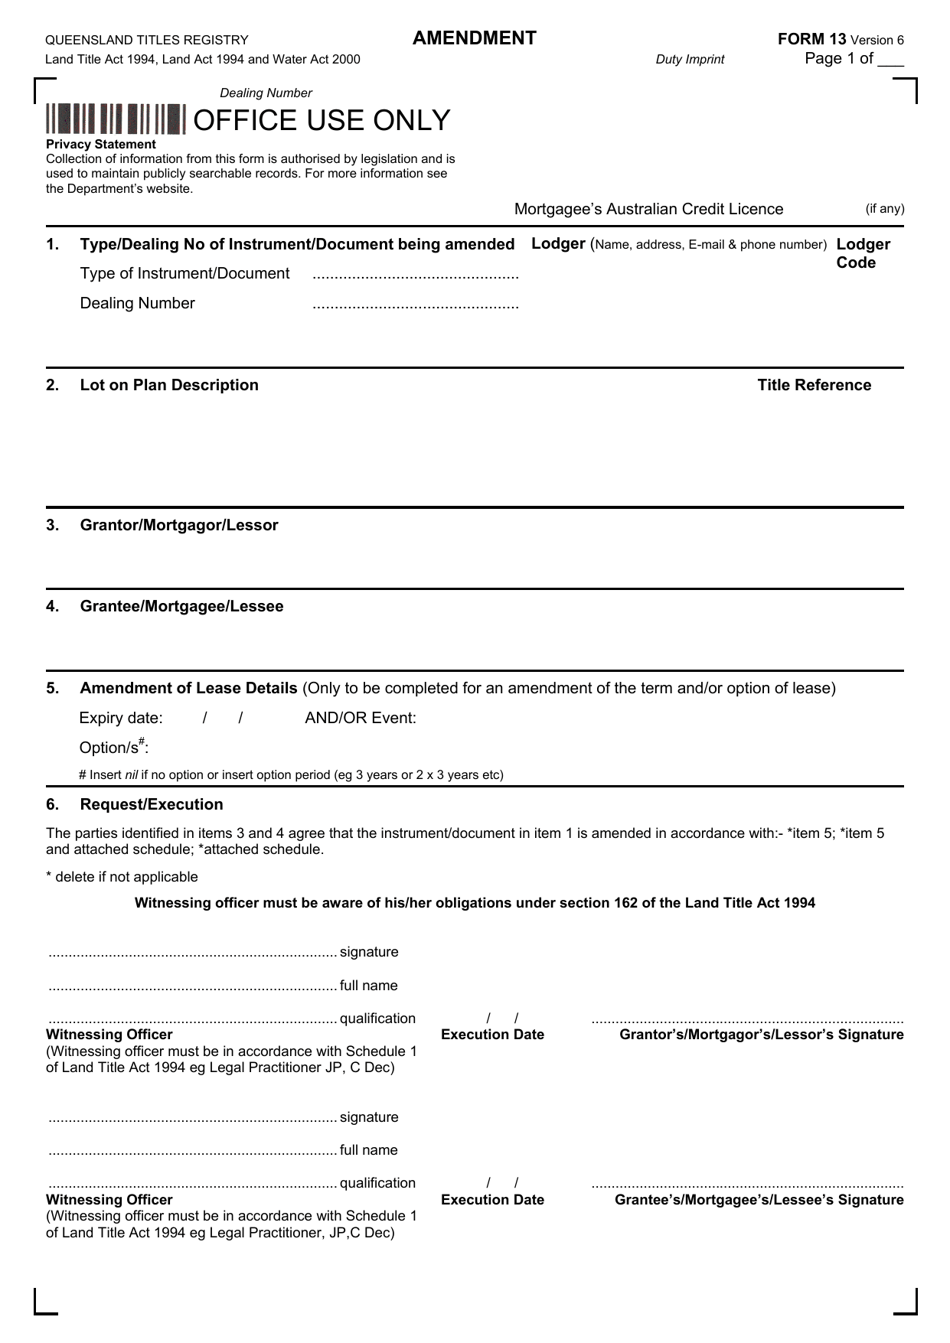 Form 13 Amendment - Queensland, Australia, Page 1